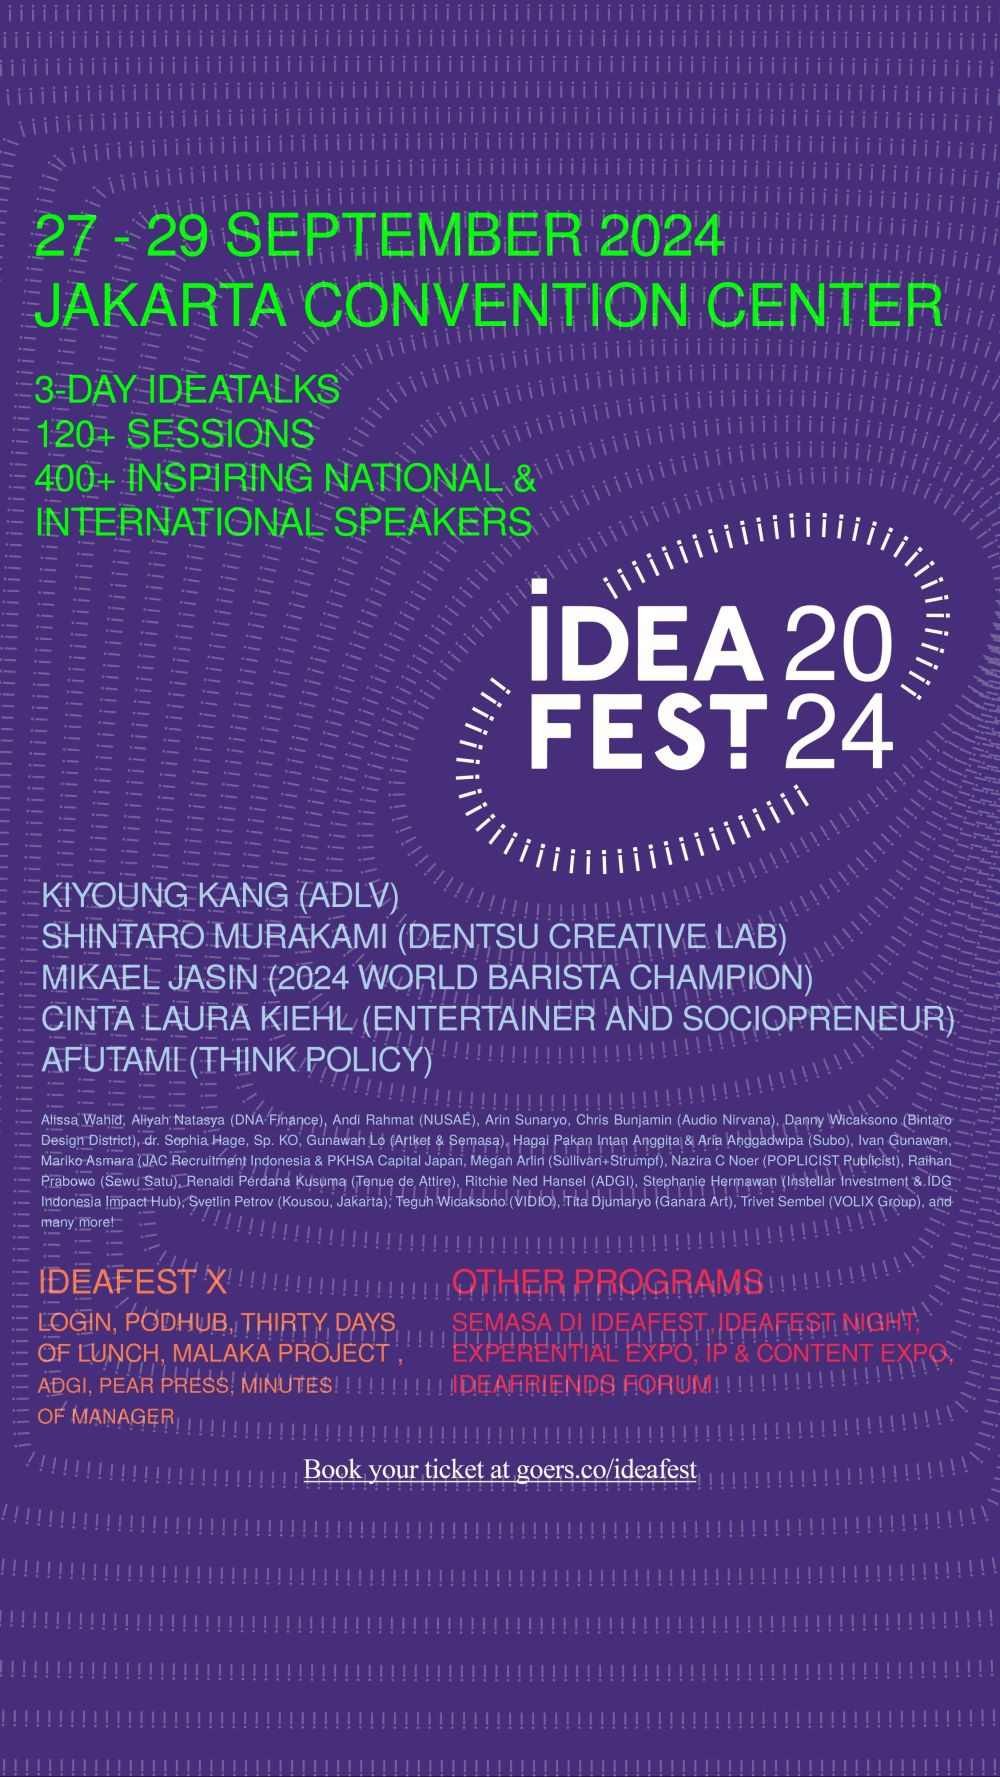 IdeaFest 2024 Hadir Kembali 27-29 September!